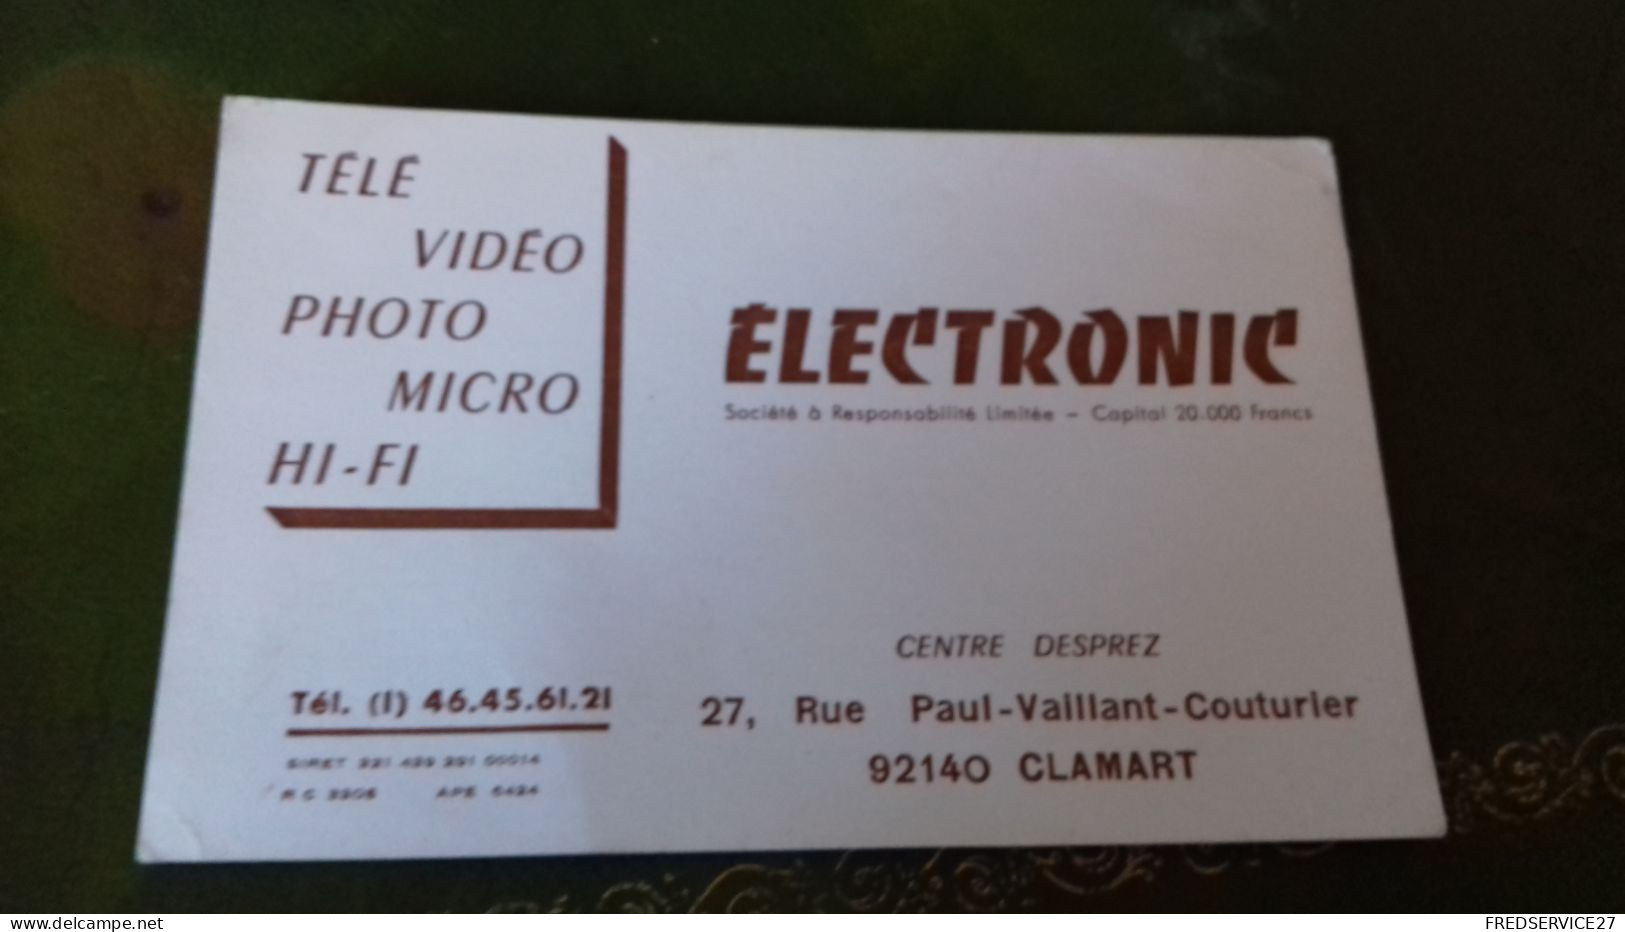 236/ CARTE DE VISITE ELECTRONIC CENTRE DESPRET CLAMART 92140 - Cartoncini Da Visita